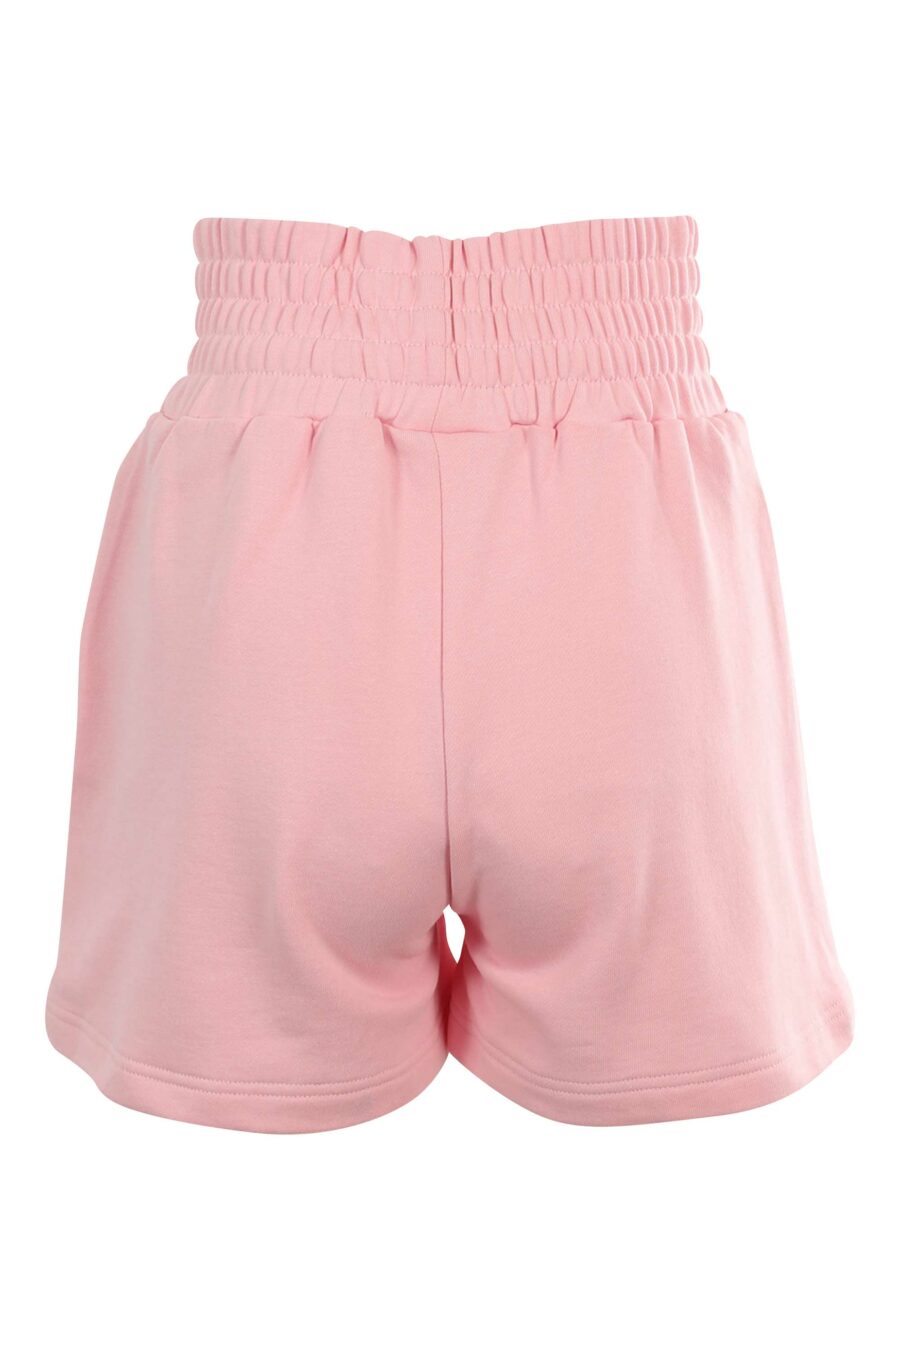 Trainingshose rosa Shorts mit Auge und Stern-Logo - 8052672415530 2